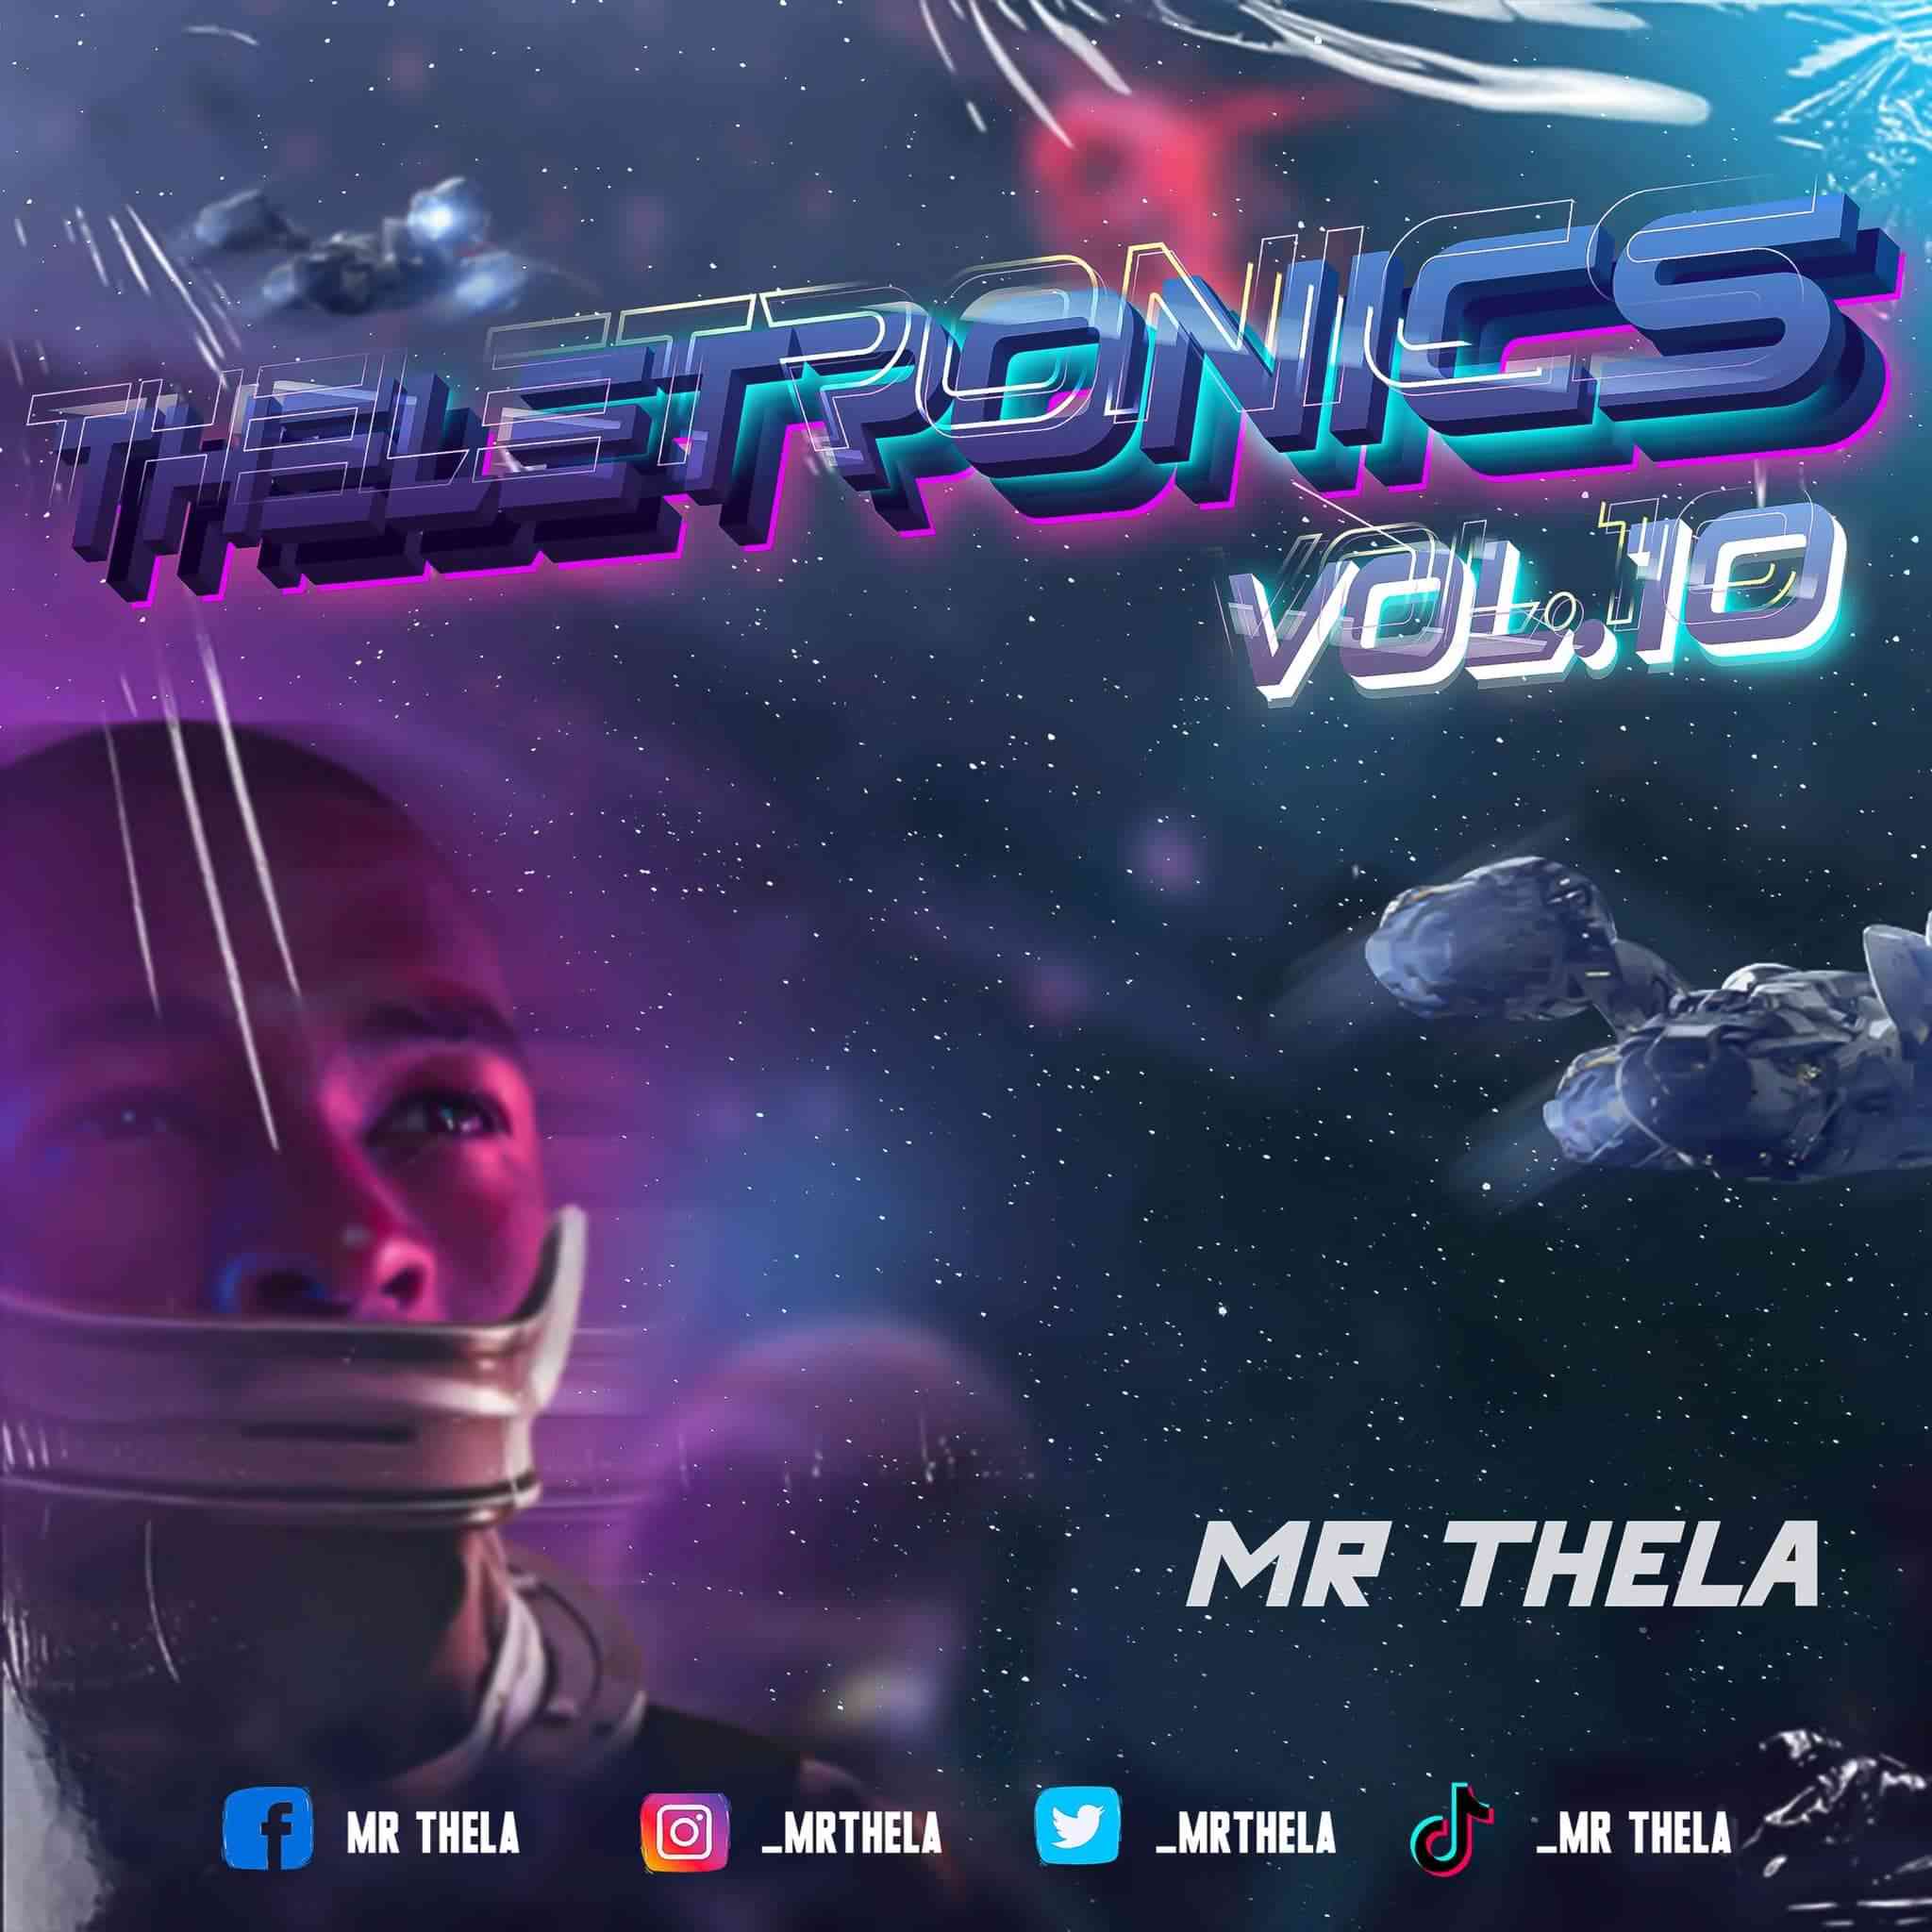 Mr Thela Theletronics Vol. 10 Mix 